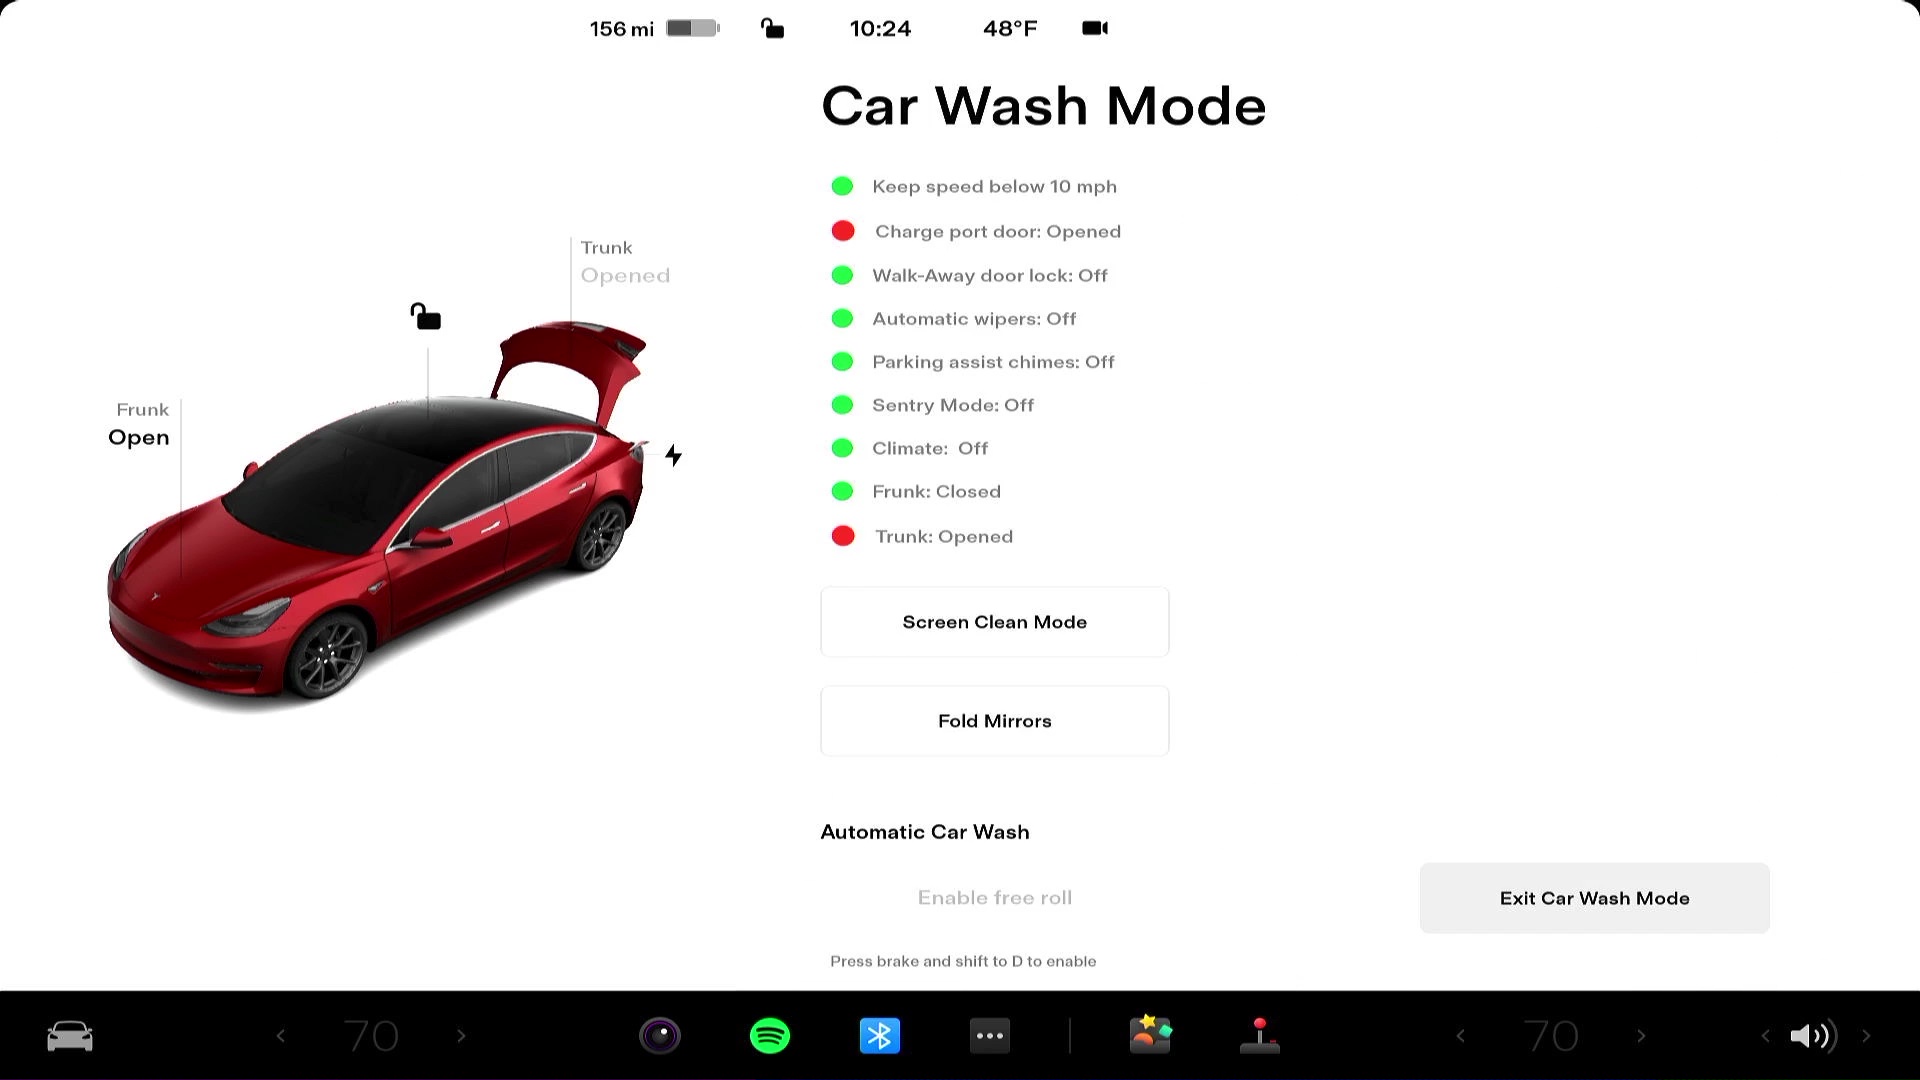 Tesla has a Car Wash Mode